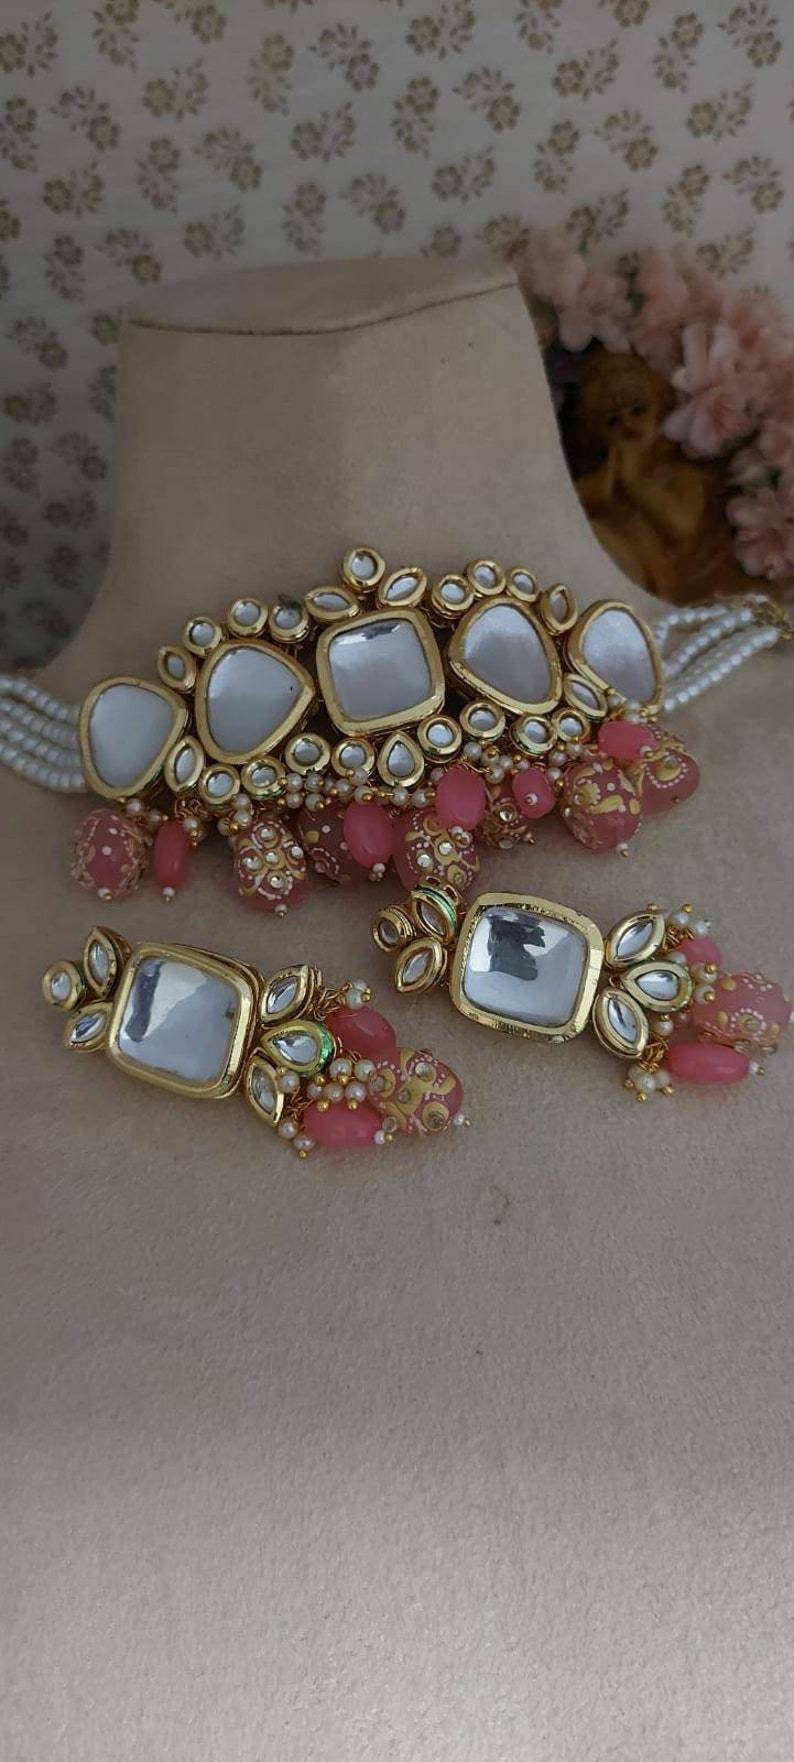 Kundan Necklace, Indian Jewelry, Indian Wedding Jewelry, Ethnic Jewelry Design, Kundan Jewelry Set, Bridal Jewelry Set, Sabyasachi Necklace | Save 33% - Rajasthan Living 15